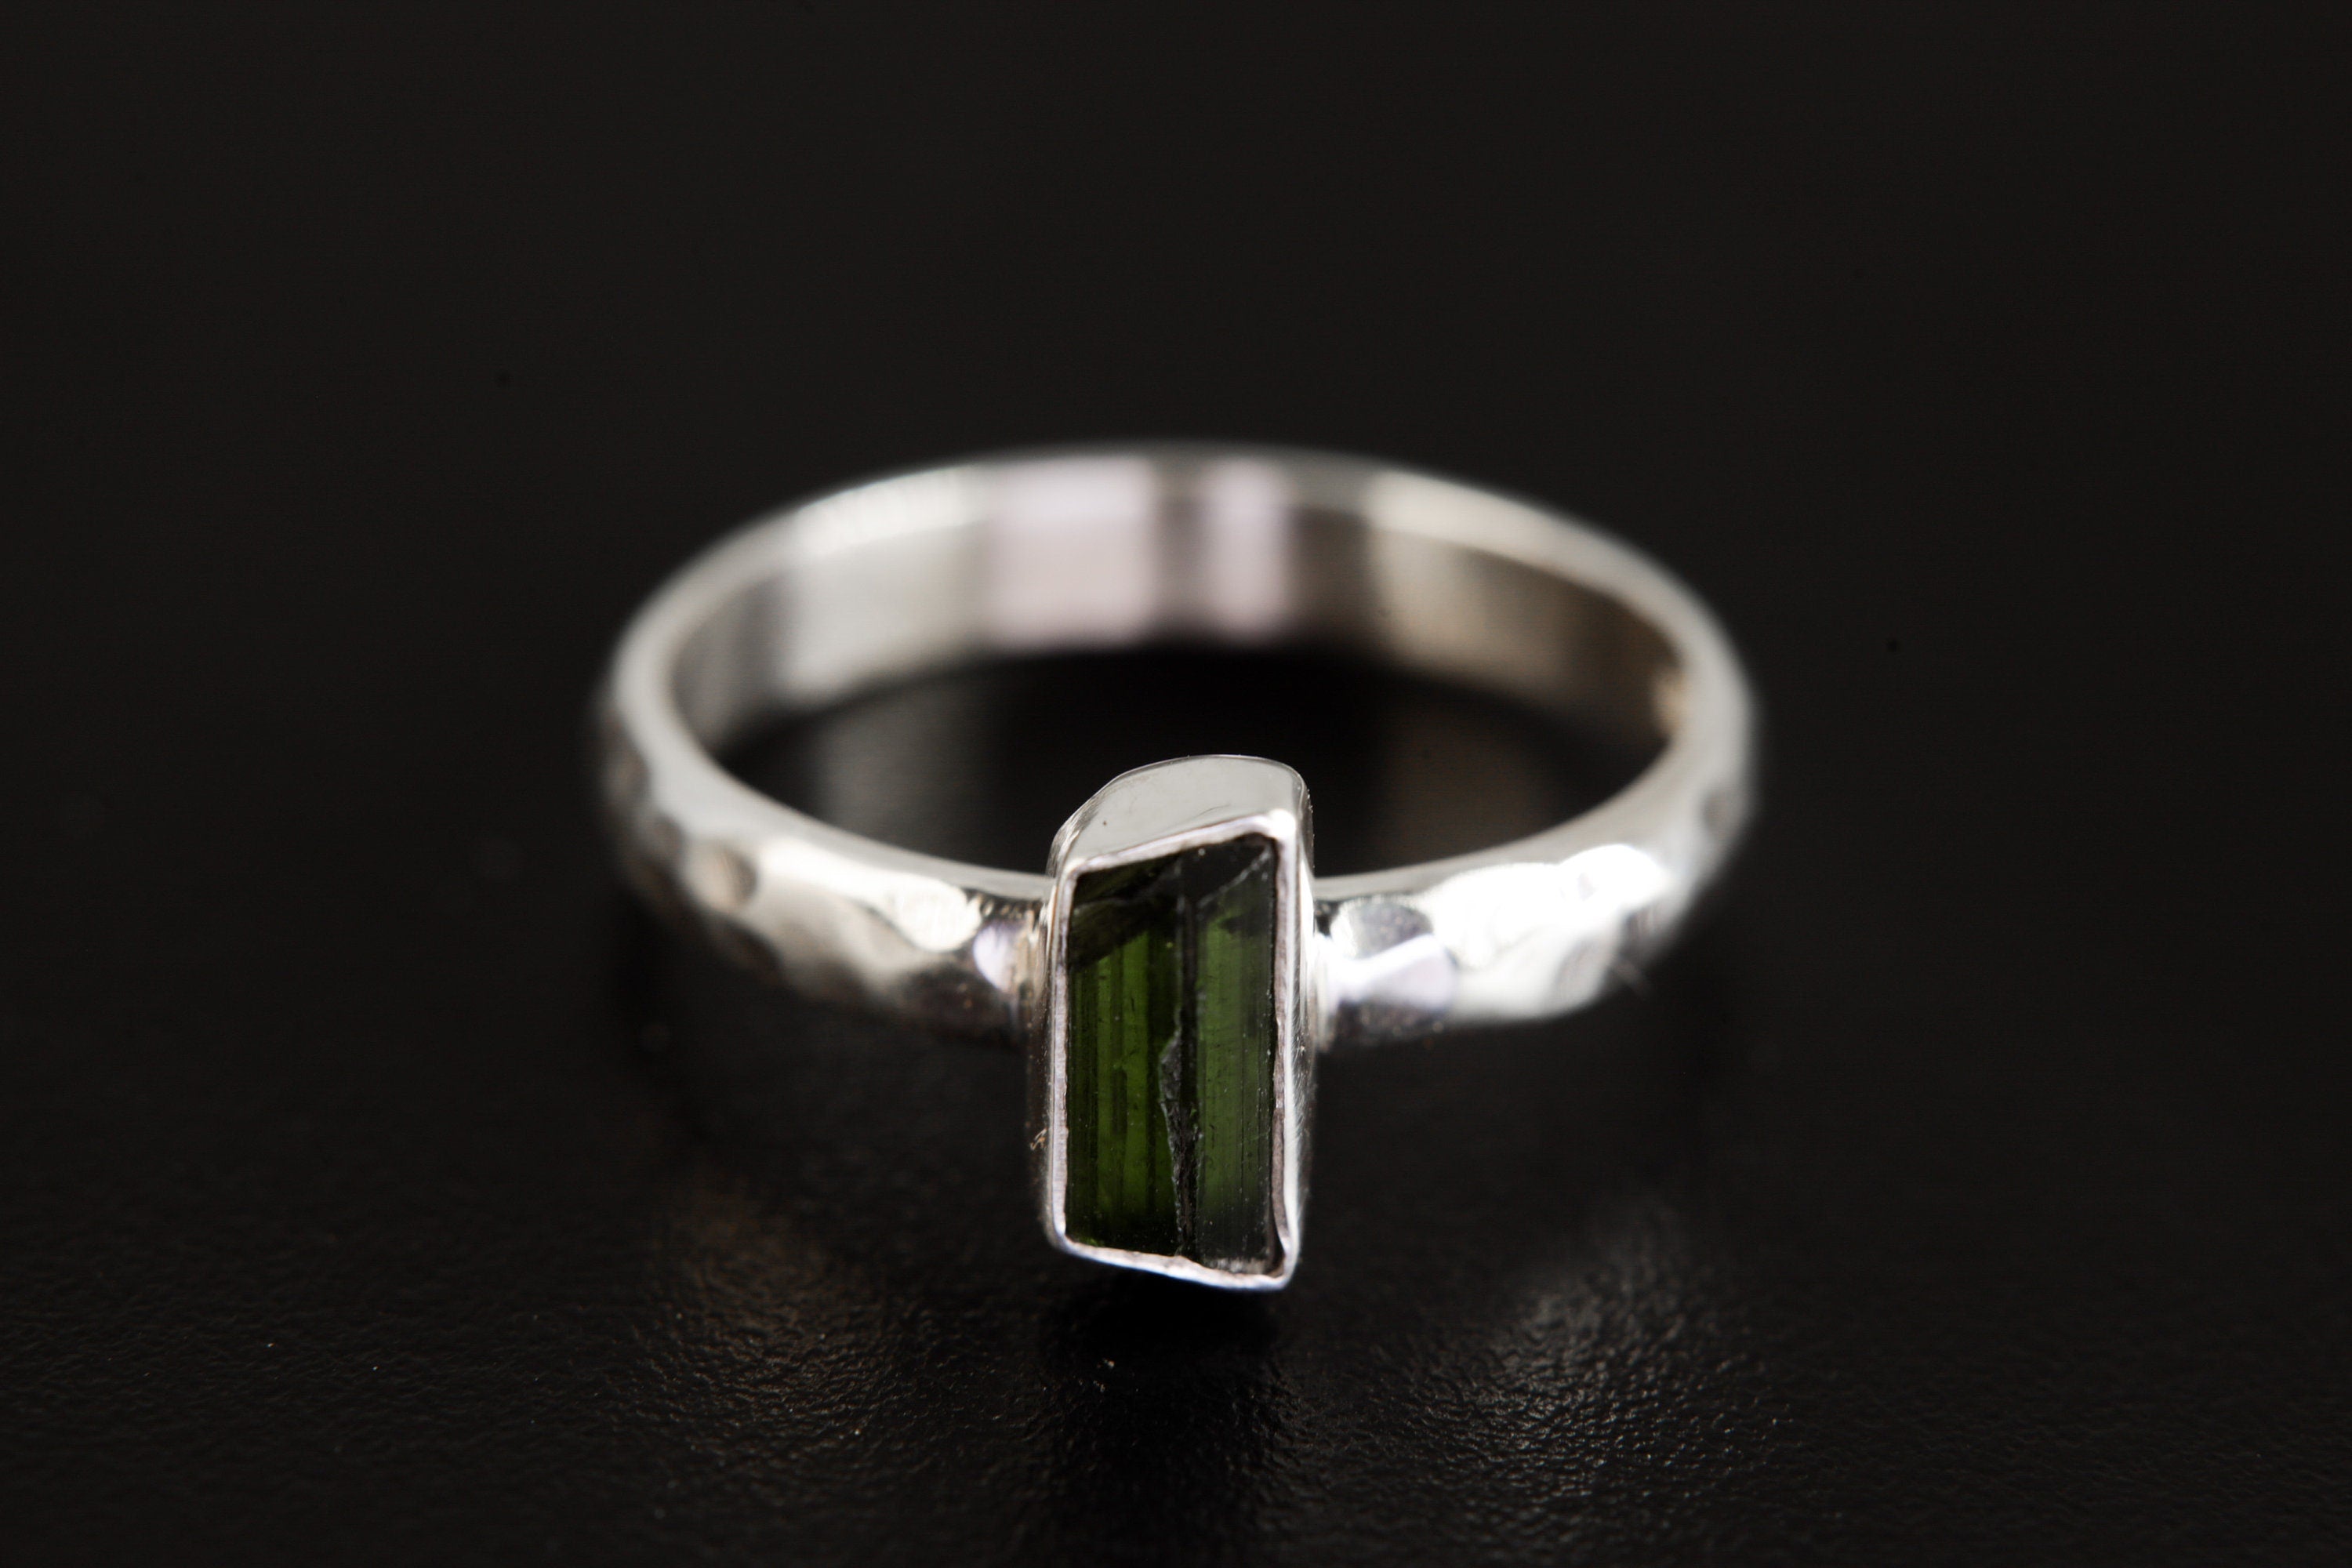 Natural Green Tourmaline Ring, Petite & Potent Gem, Sterling Silver, Hammer Textured Shiny Band Size 6 US, Heart Chakra Libra/Virgo Energy